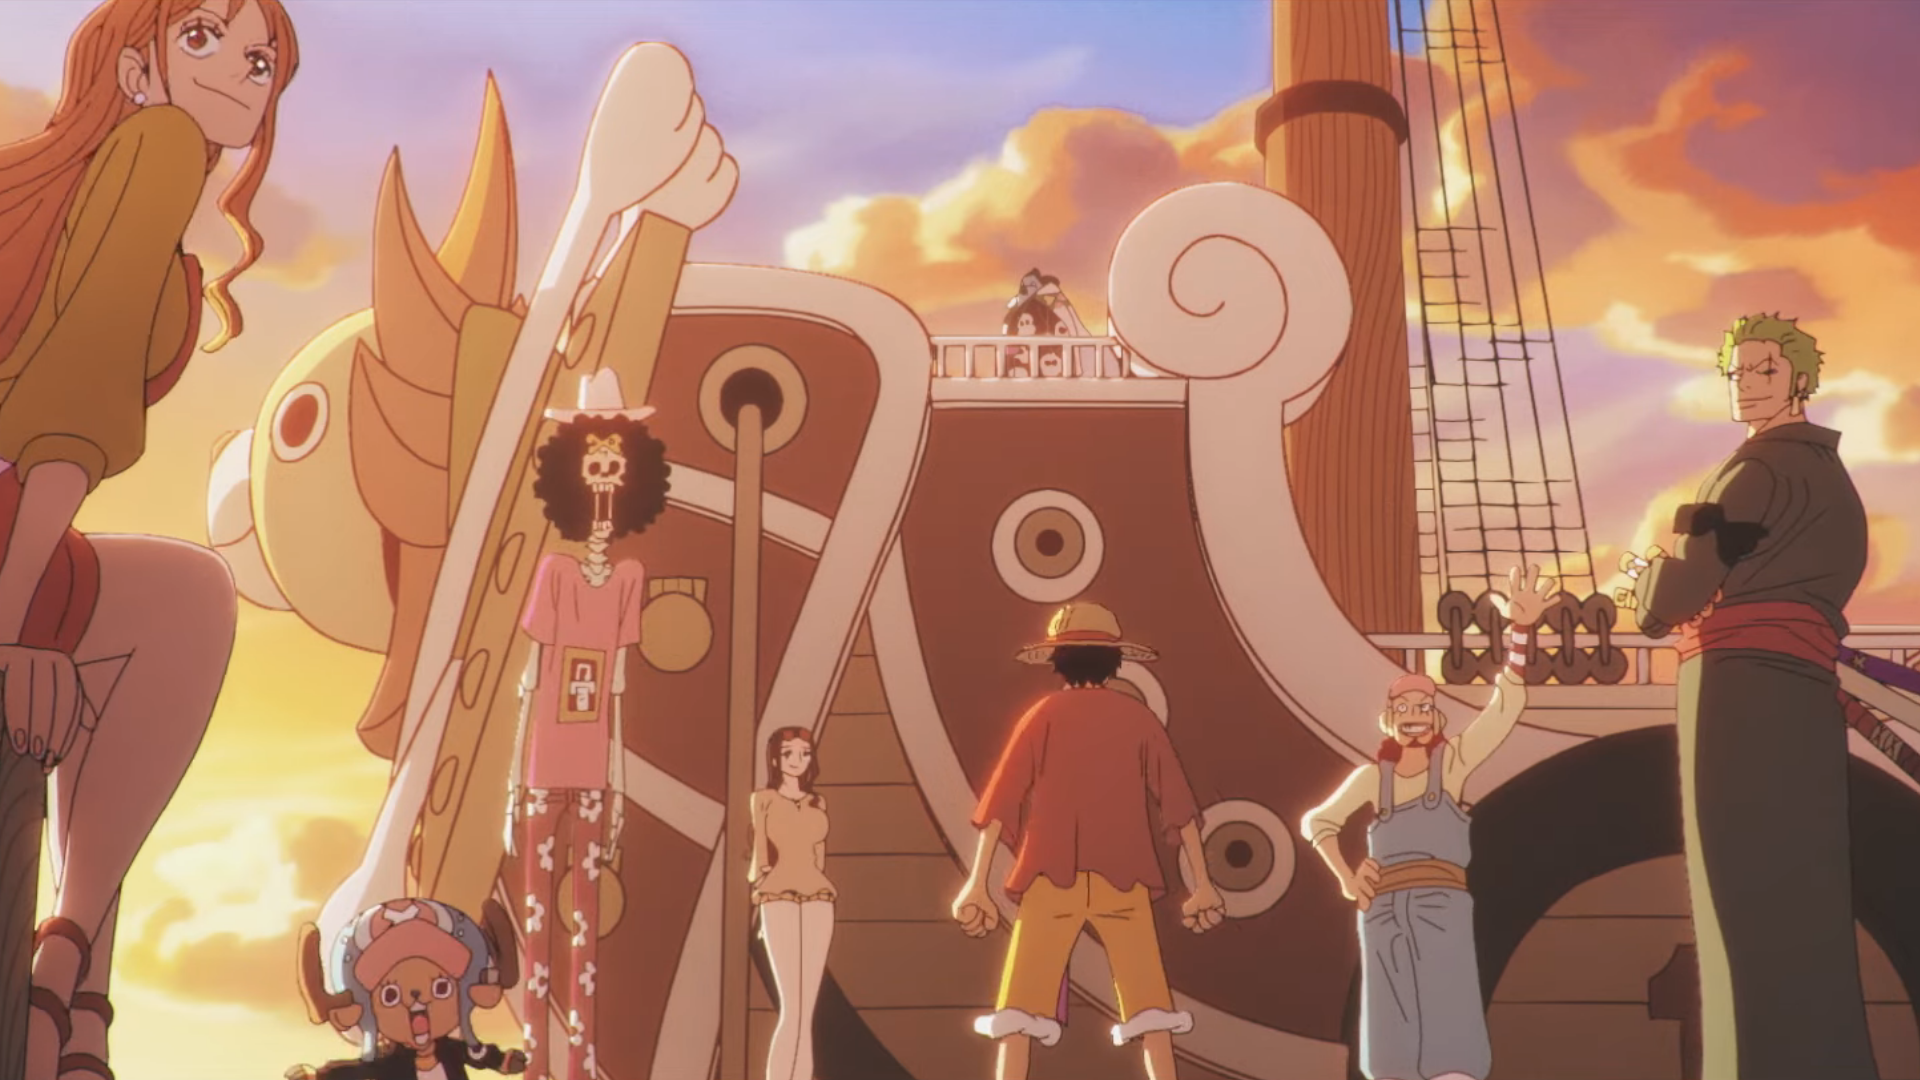 One Piece: Season 19, Episode 19 - Rotten Tomatoes